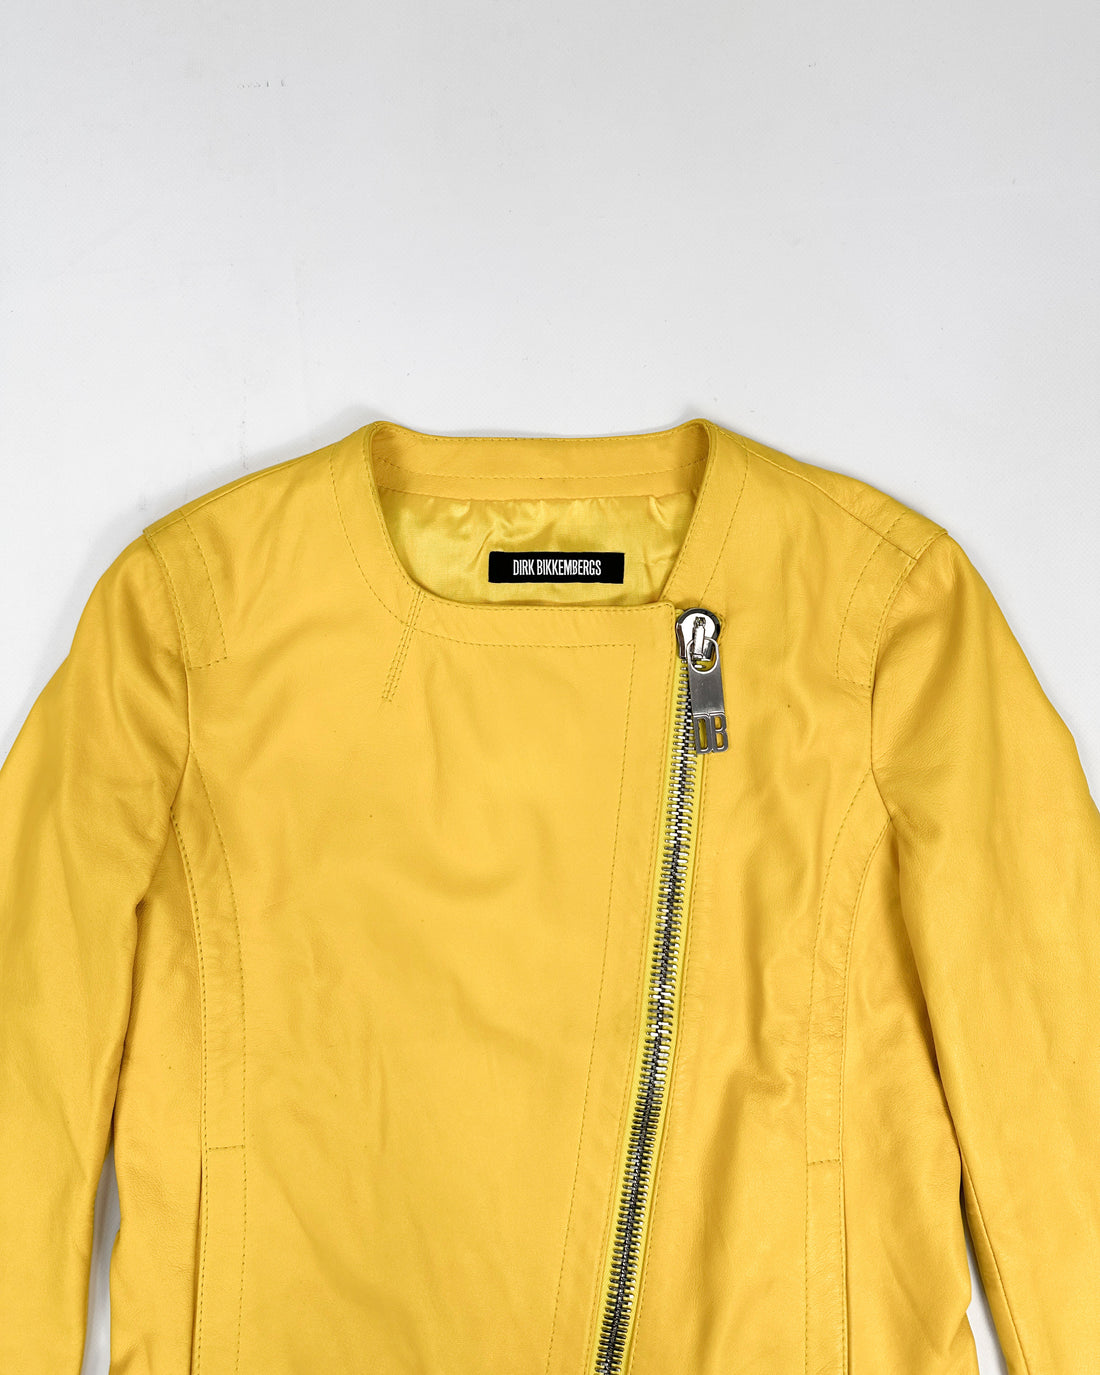 Dirk Bikkembergs Off Centered Zip Yellow Leather Jacket 2000's